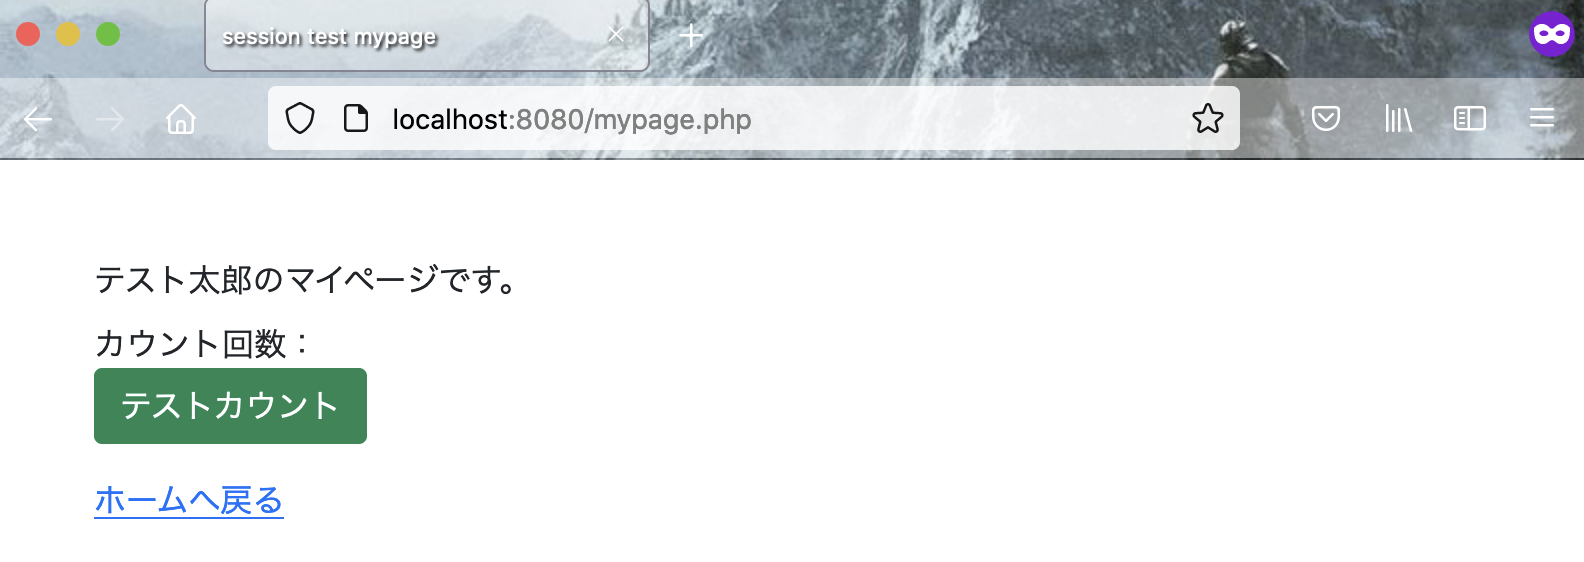 PHPのセッション確認・マイページ画面